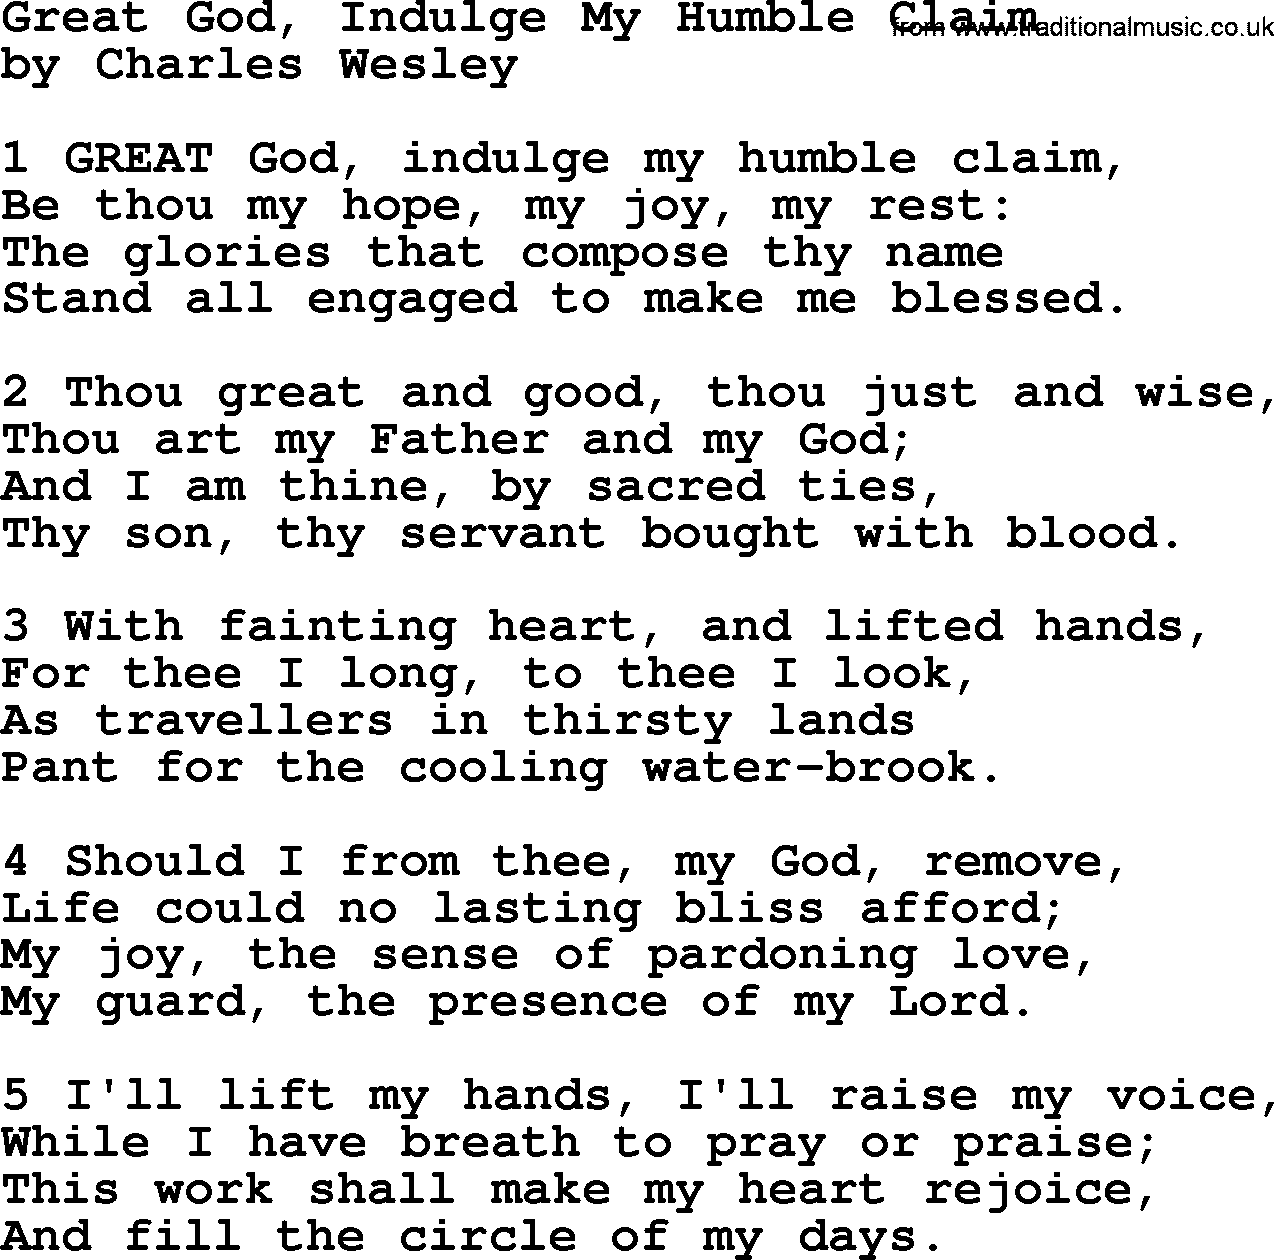 Charles Wesley hymn: Great God, Indulge My Humble Claim, lyrics